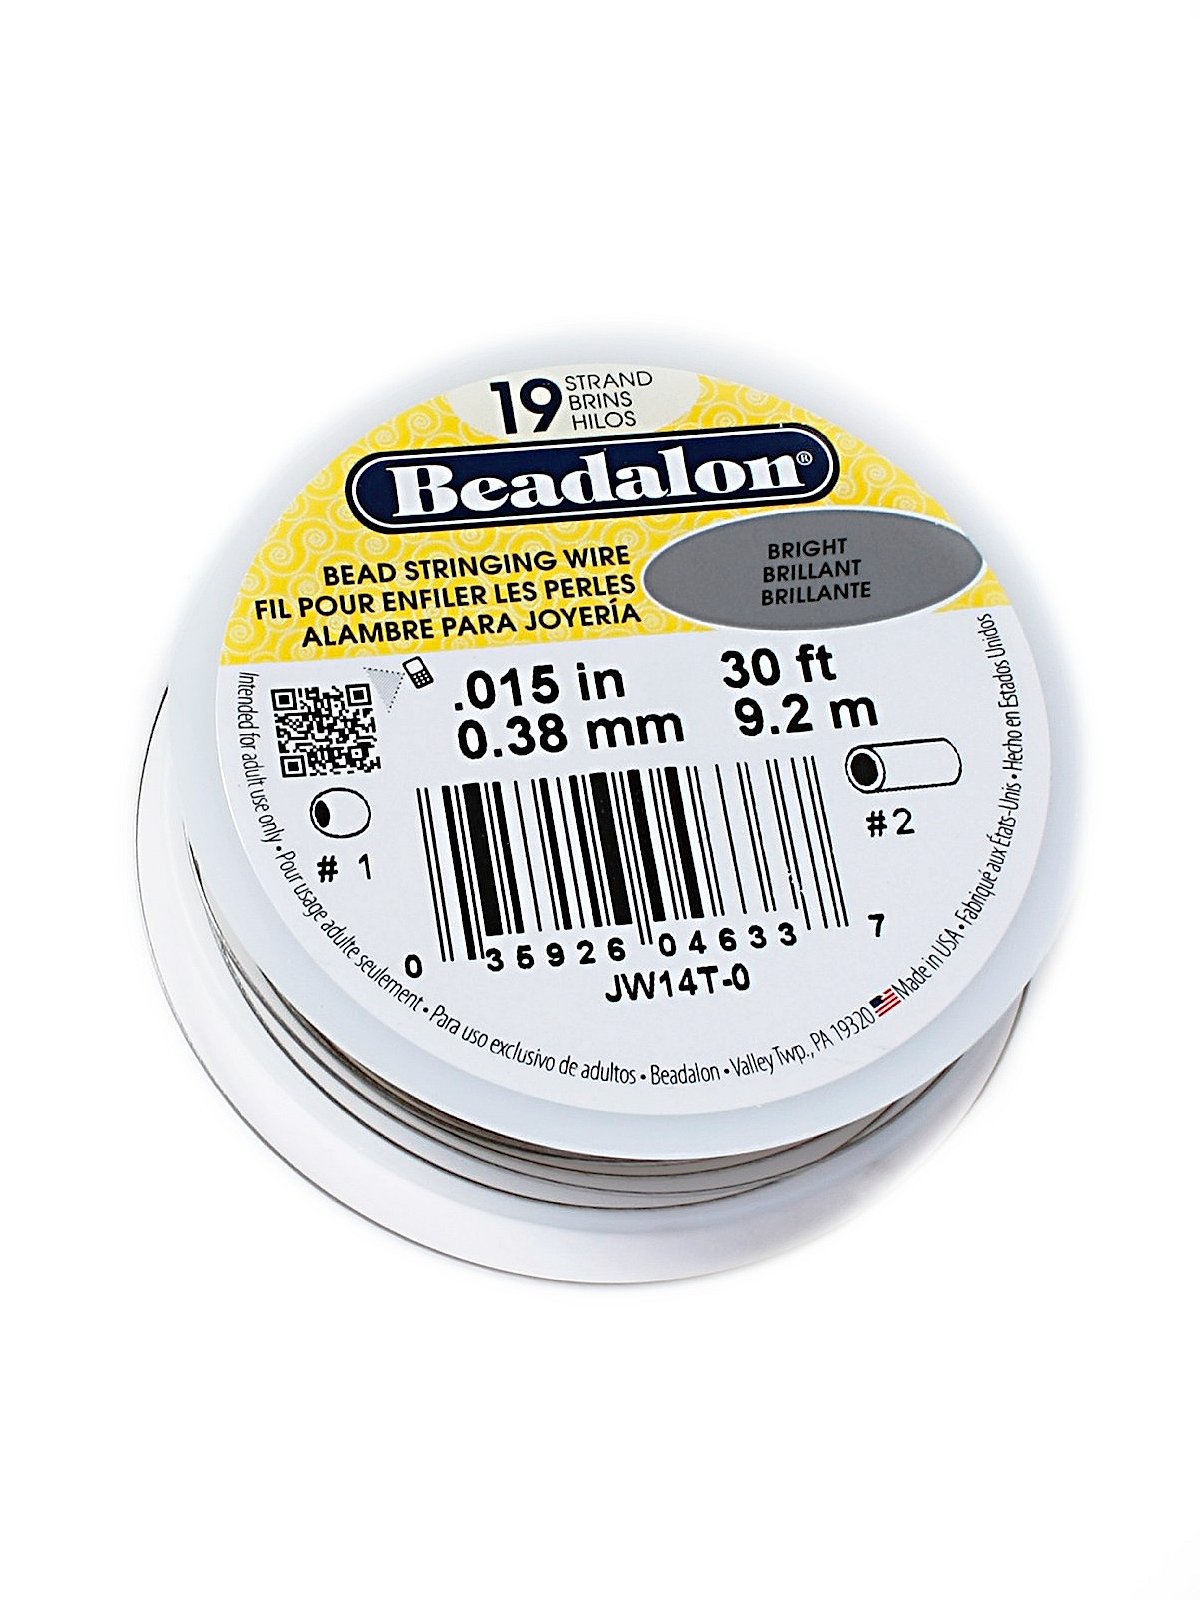 Beadalon® 0.38mm Silver 7 Strand Bead Stringing Wire